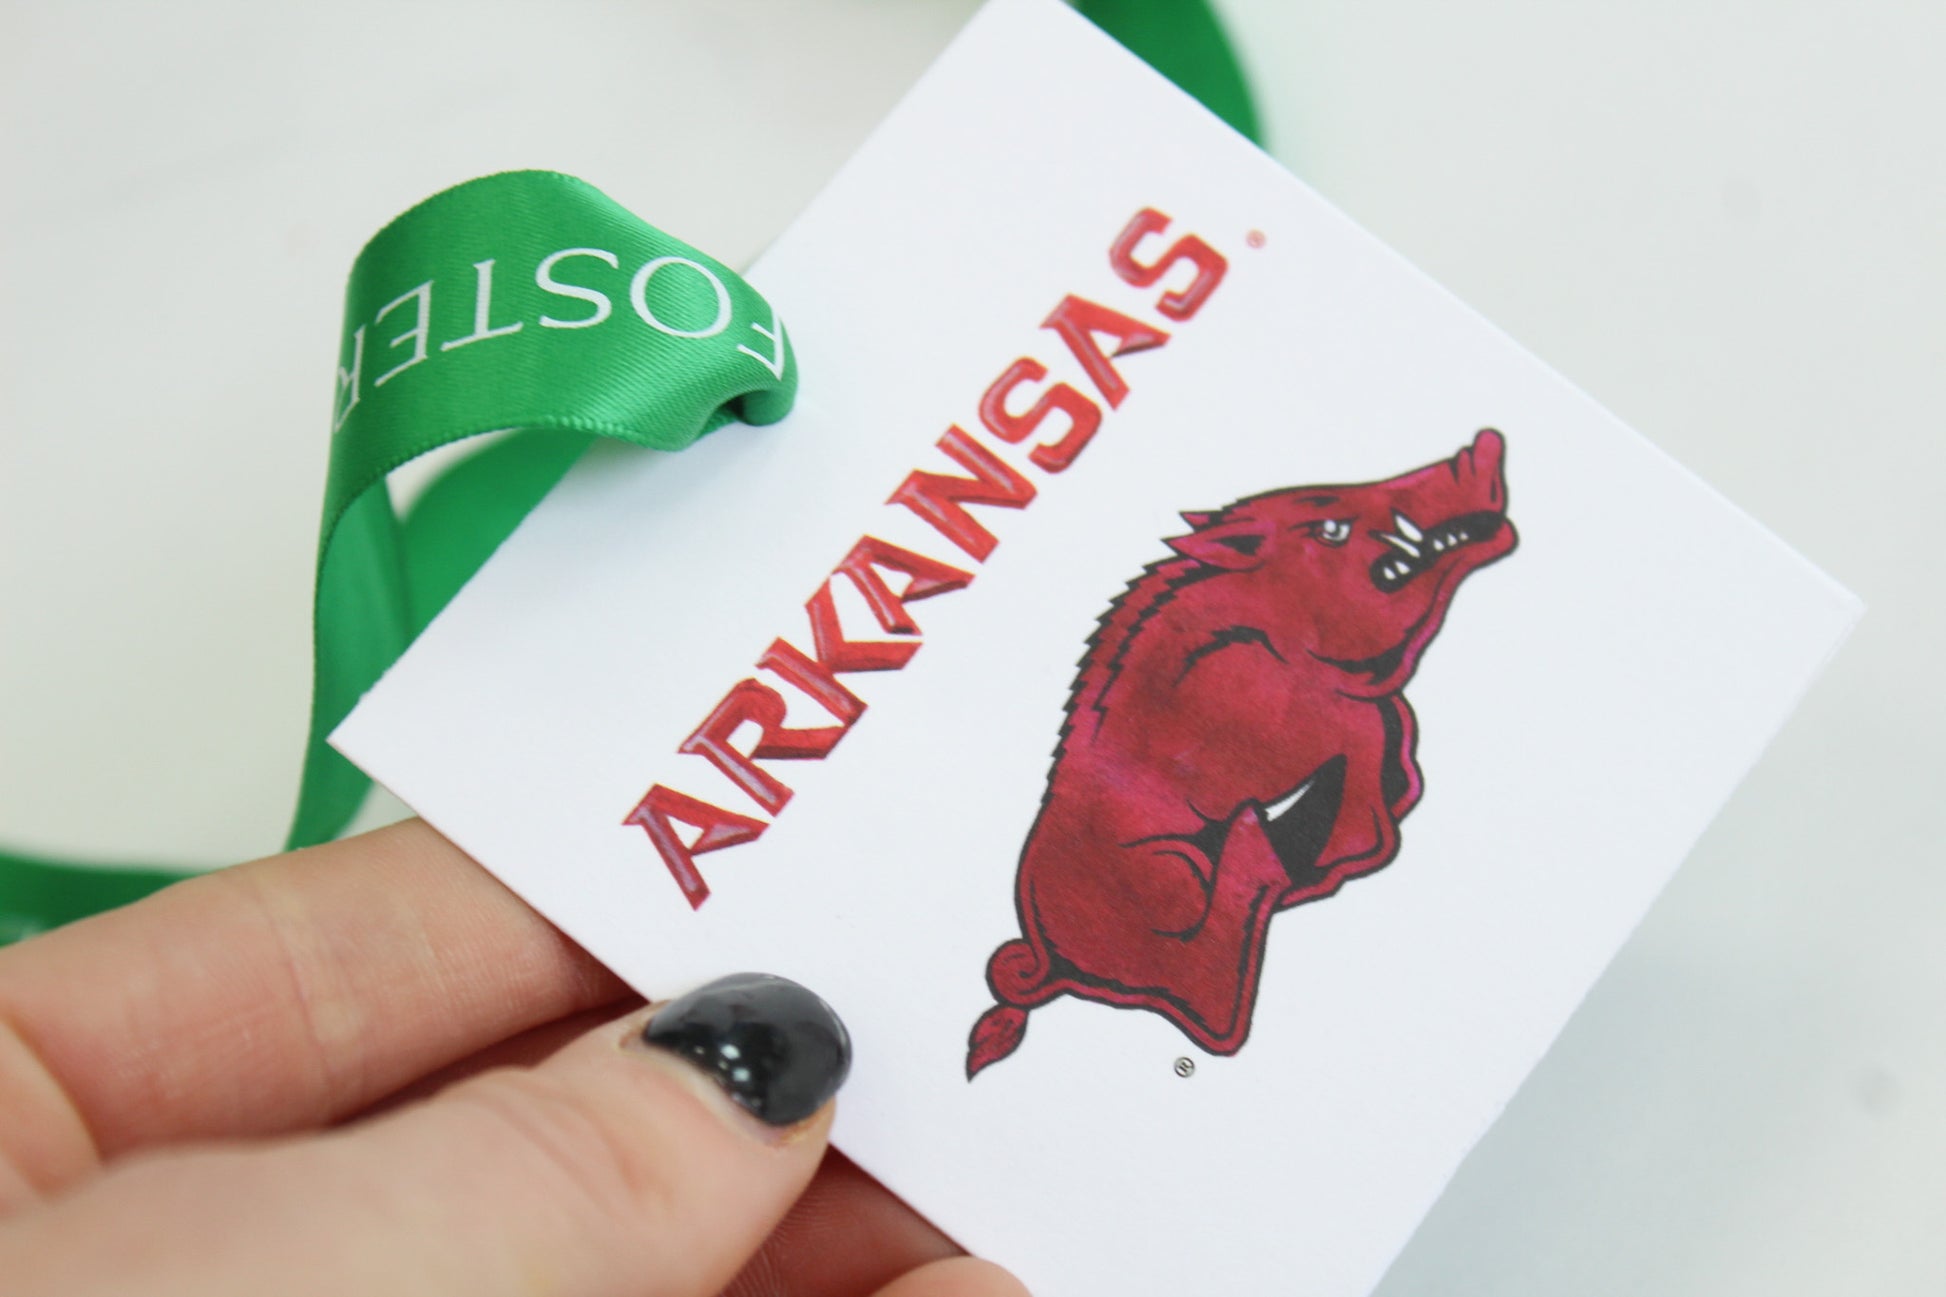 University of Arkansas Razorback gift tags